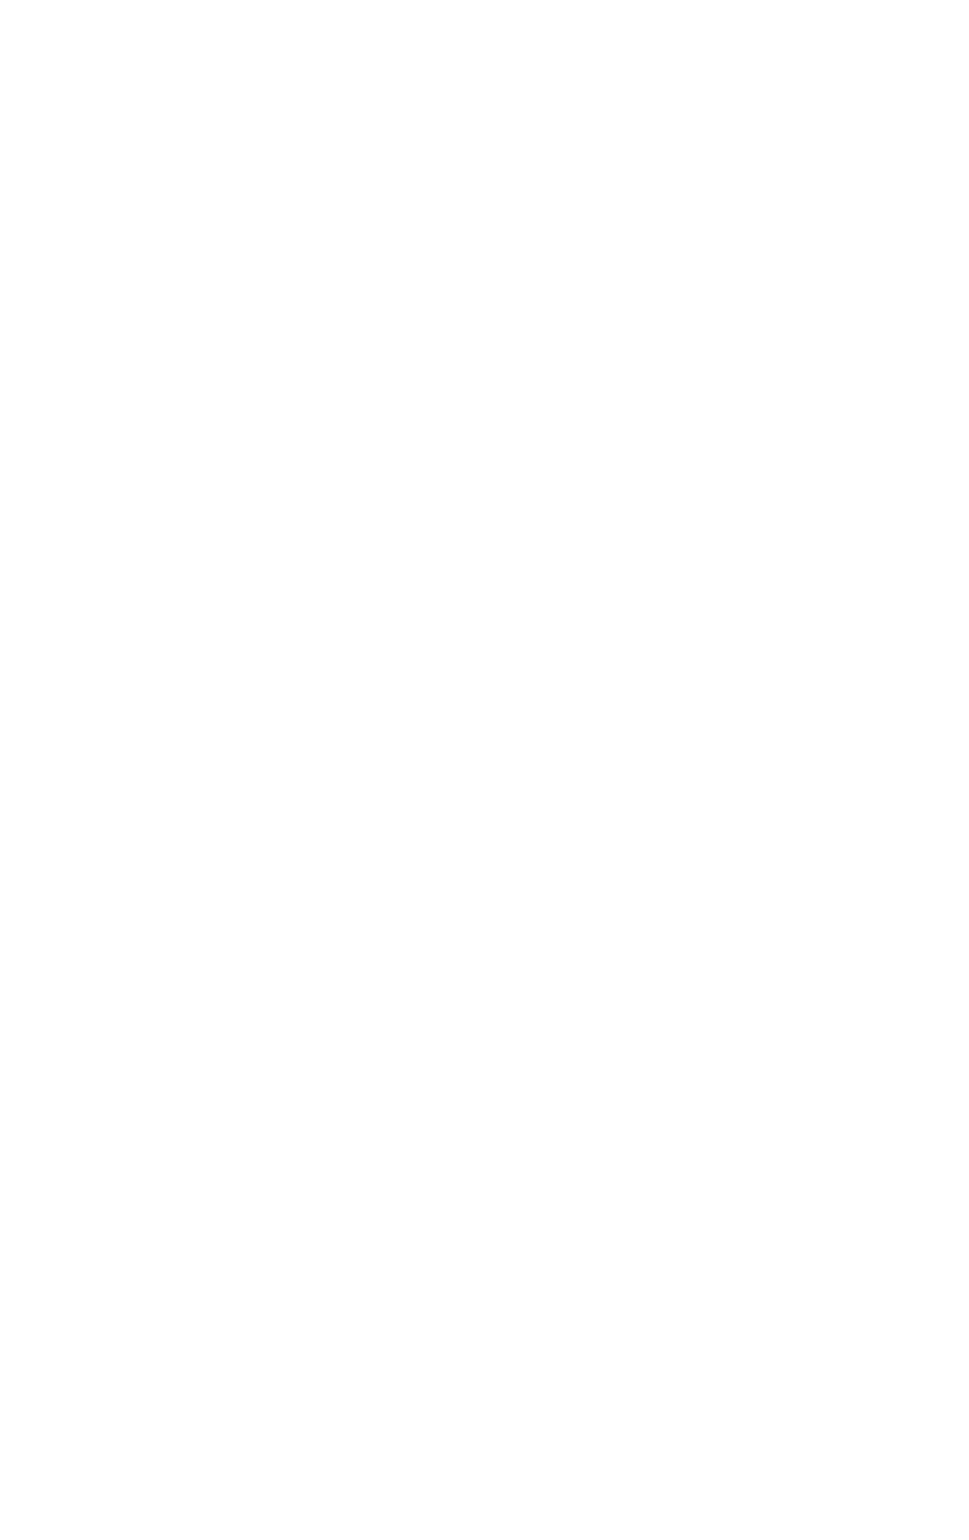 Etihad Etisalat (Mobily) logo large for dark backgrounds (transparent PNG)